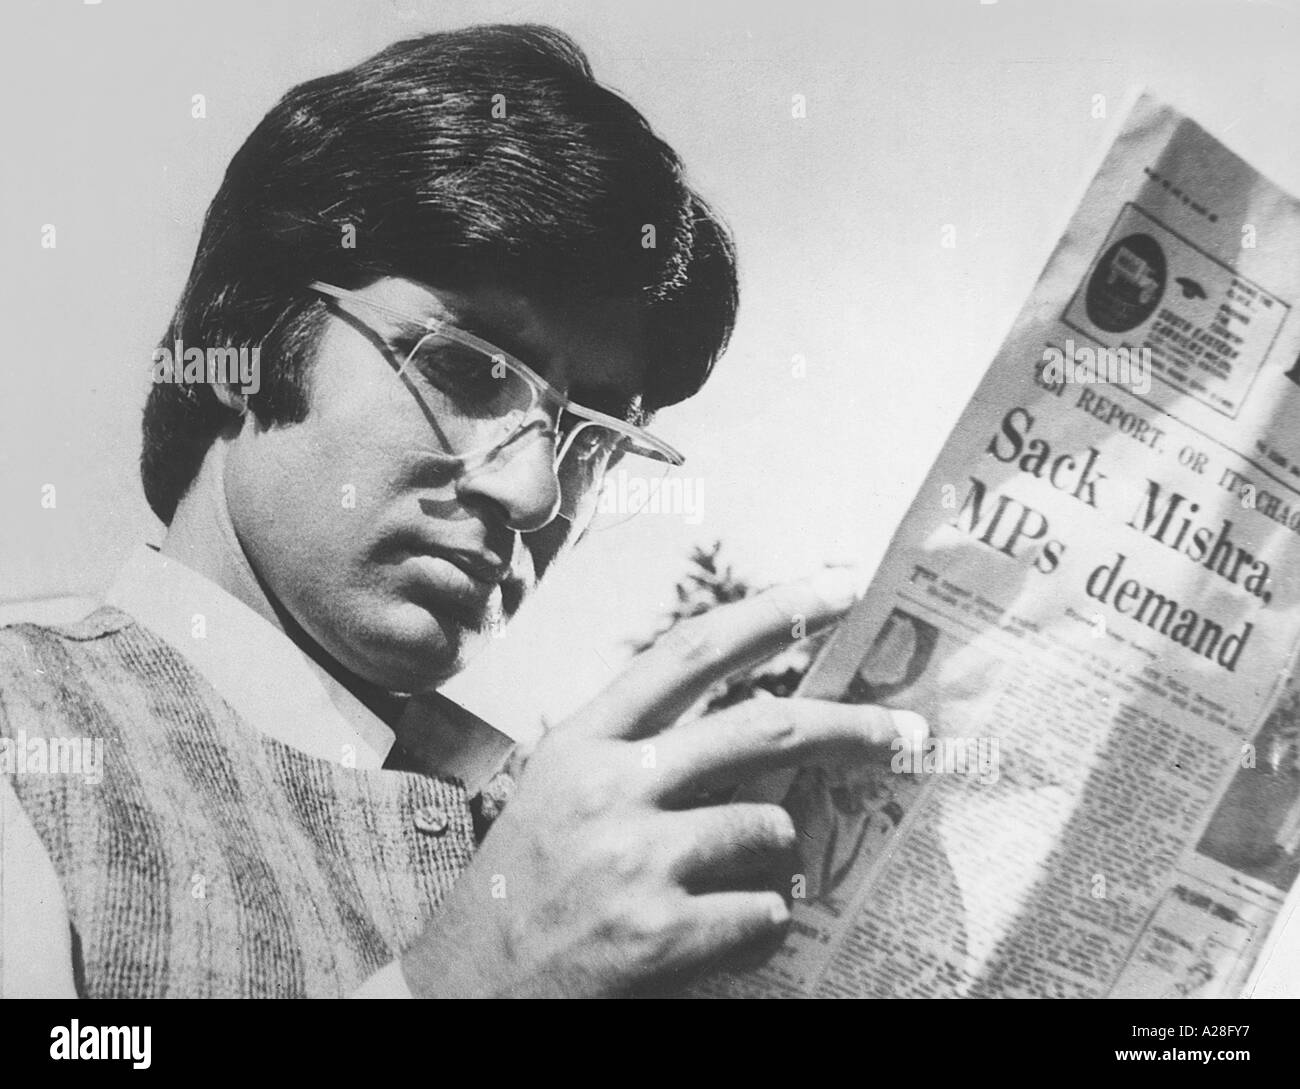 Indian Bollywood Film Star Actor Amitabh Bachchan reading news paper in Film Chupke Chupke Stock Photo